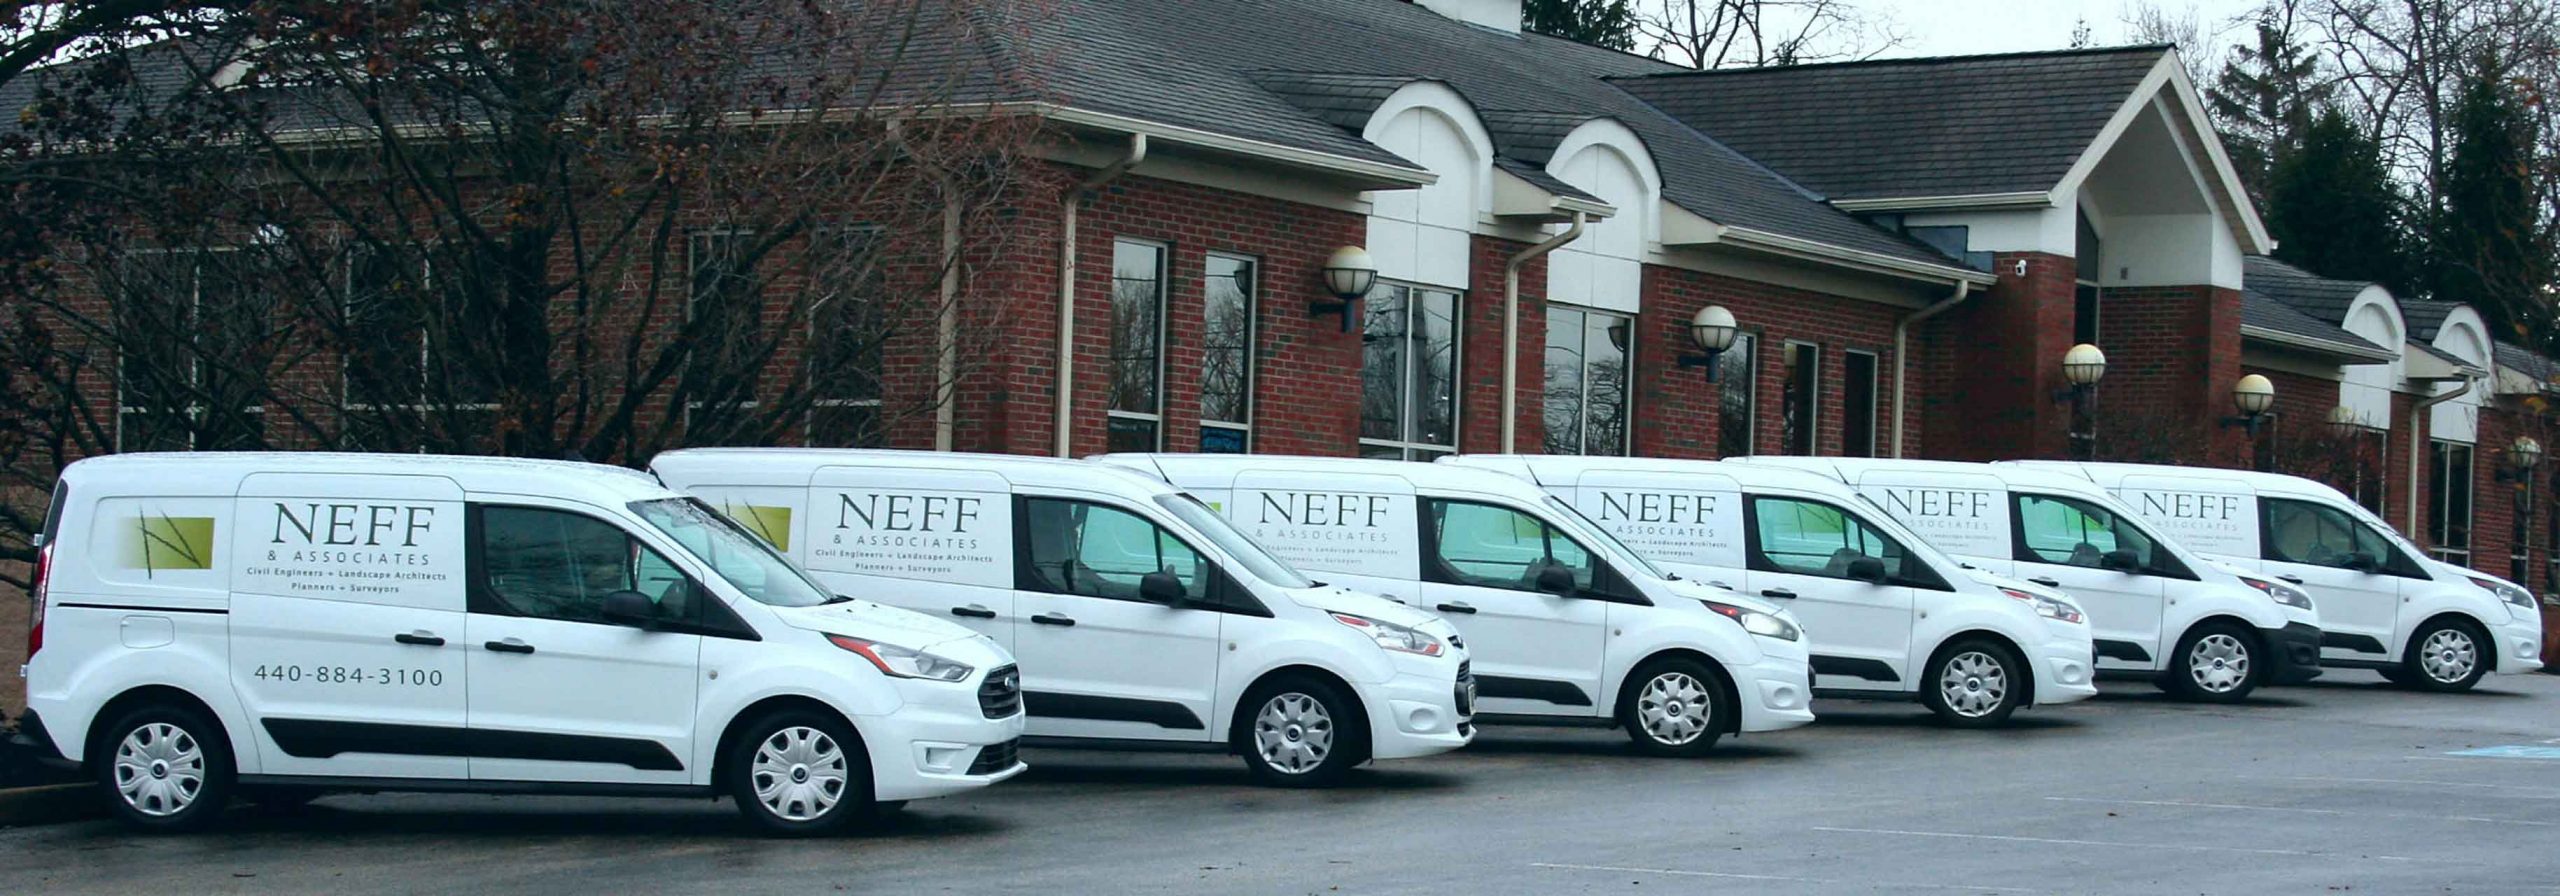 Neff survey vans & office